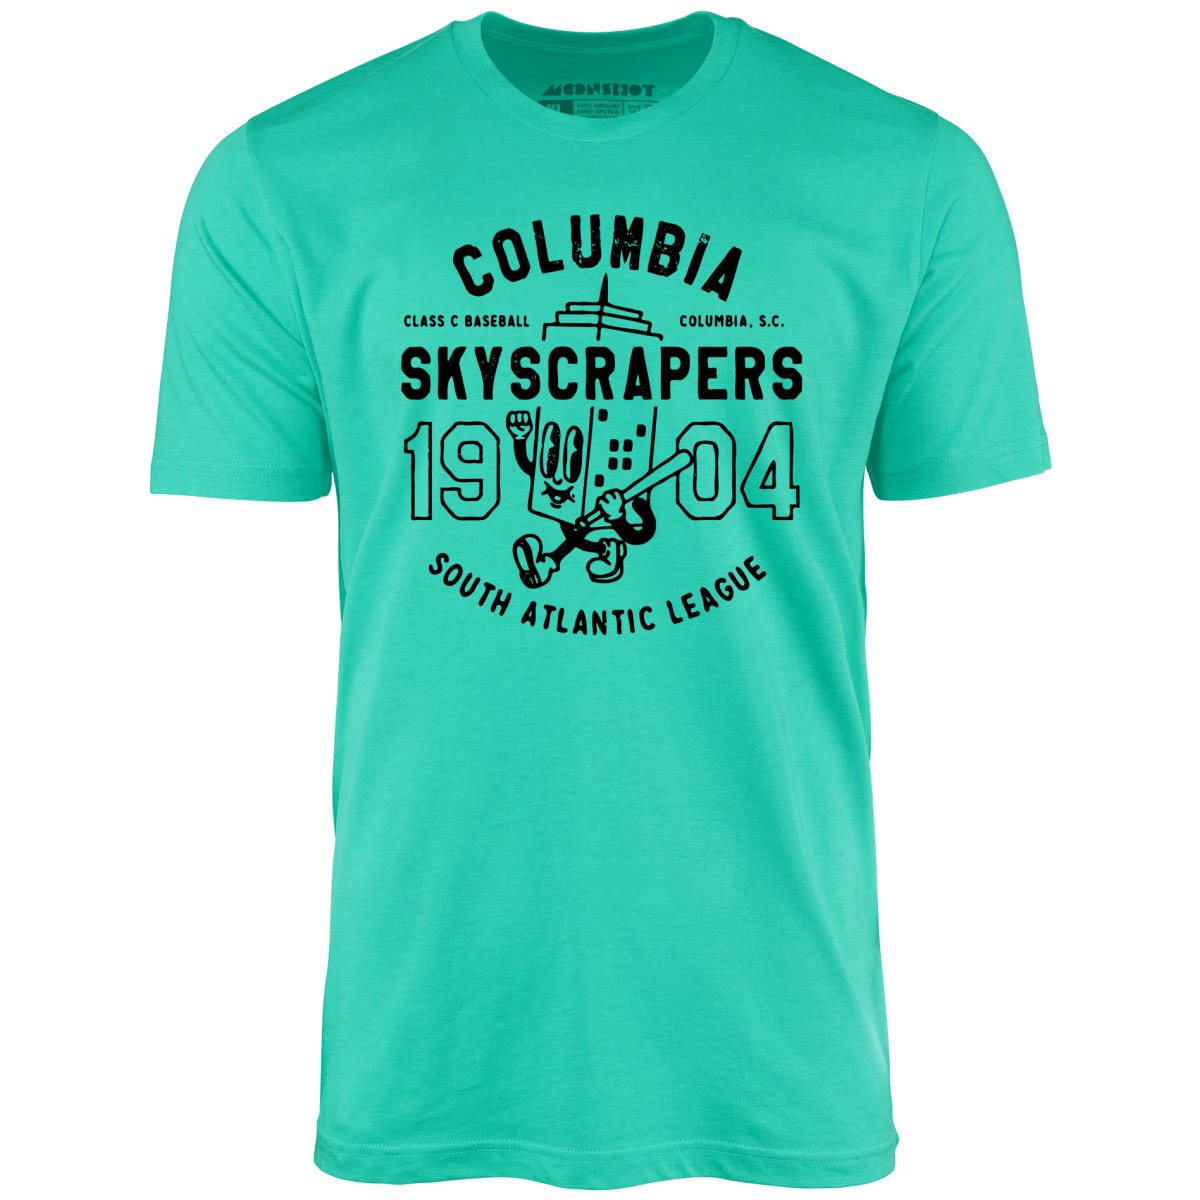 Columbia Skyscrapers - South Carolina - Vintage Defunct Baseball Teams - Unisex T-Shirt